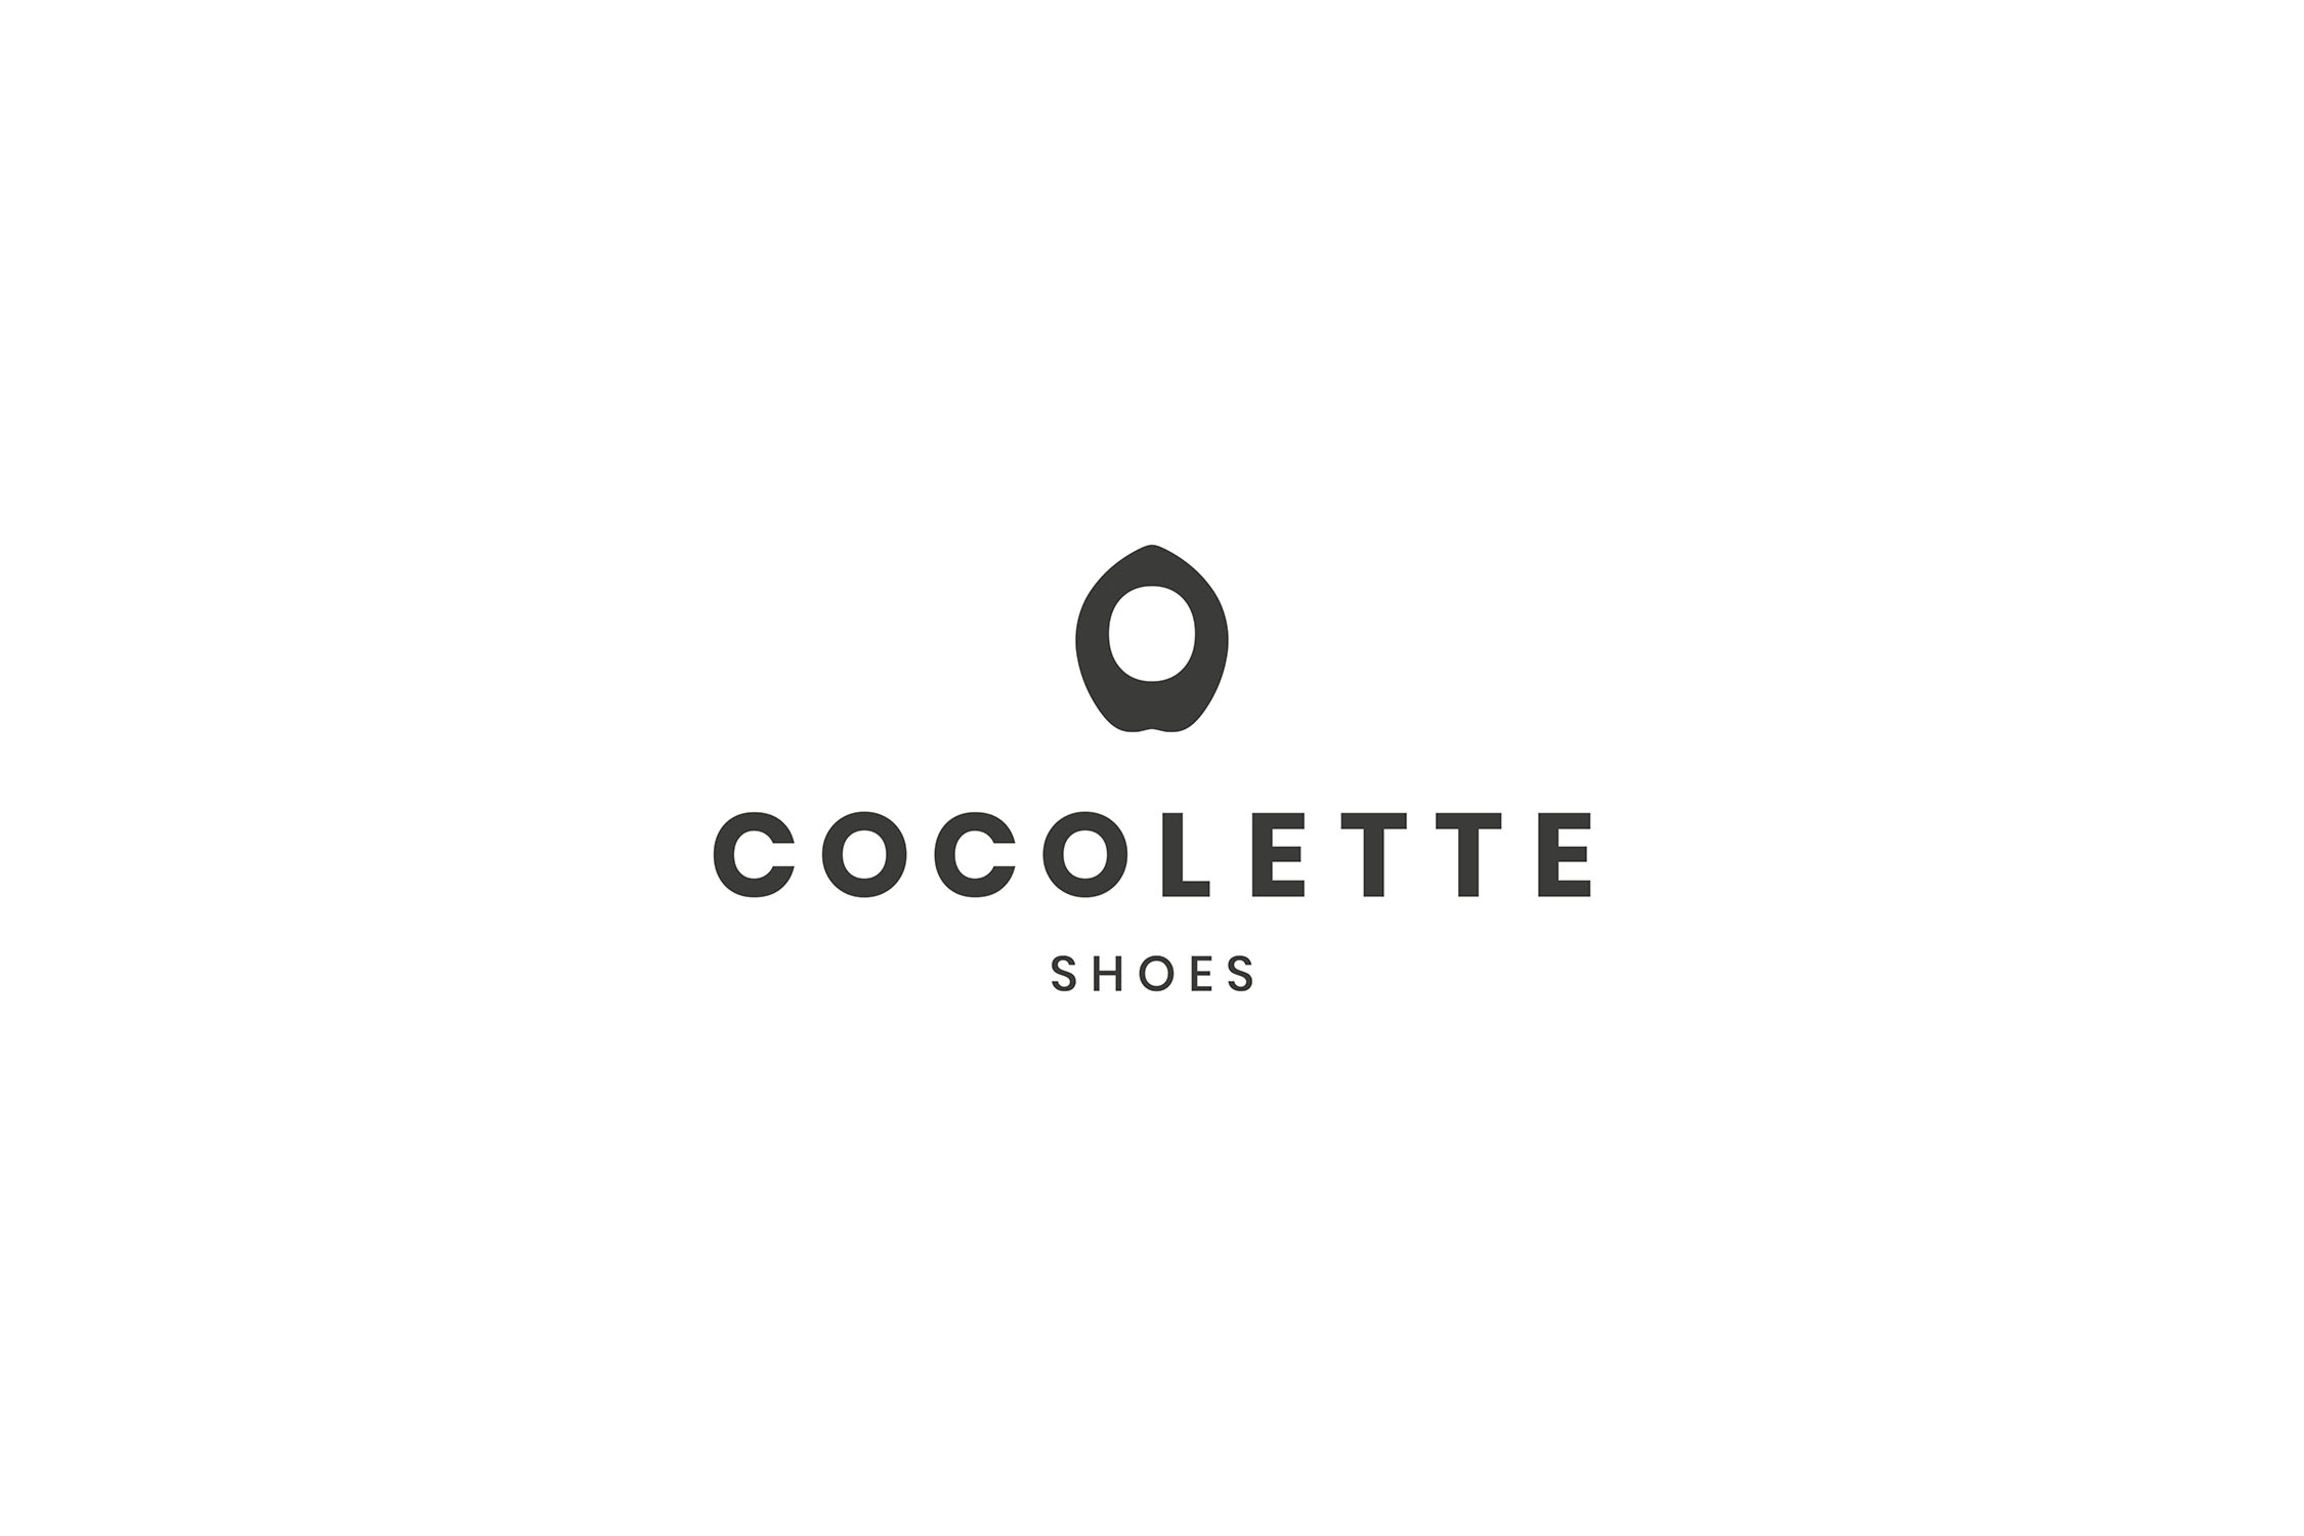 Cocolette shoes: walk coconsciously